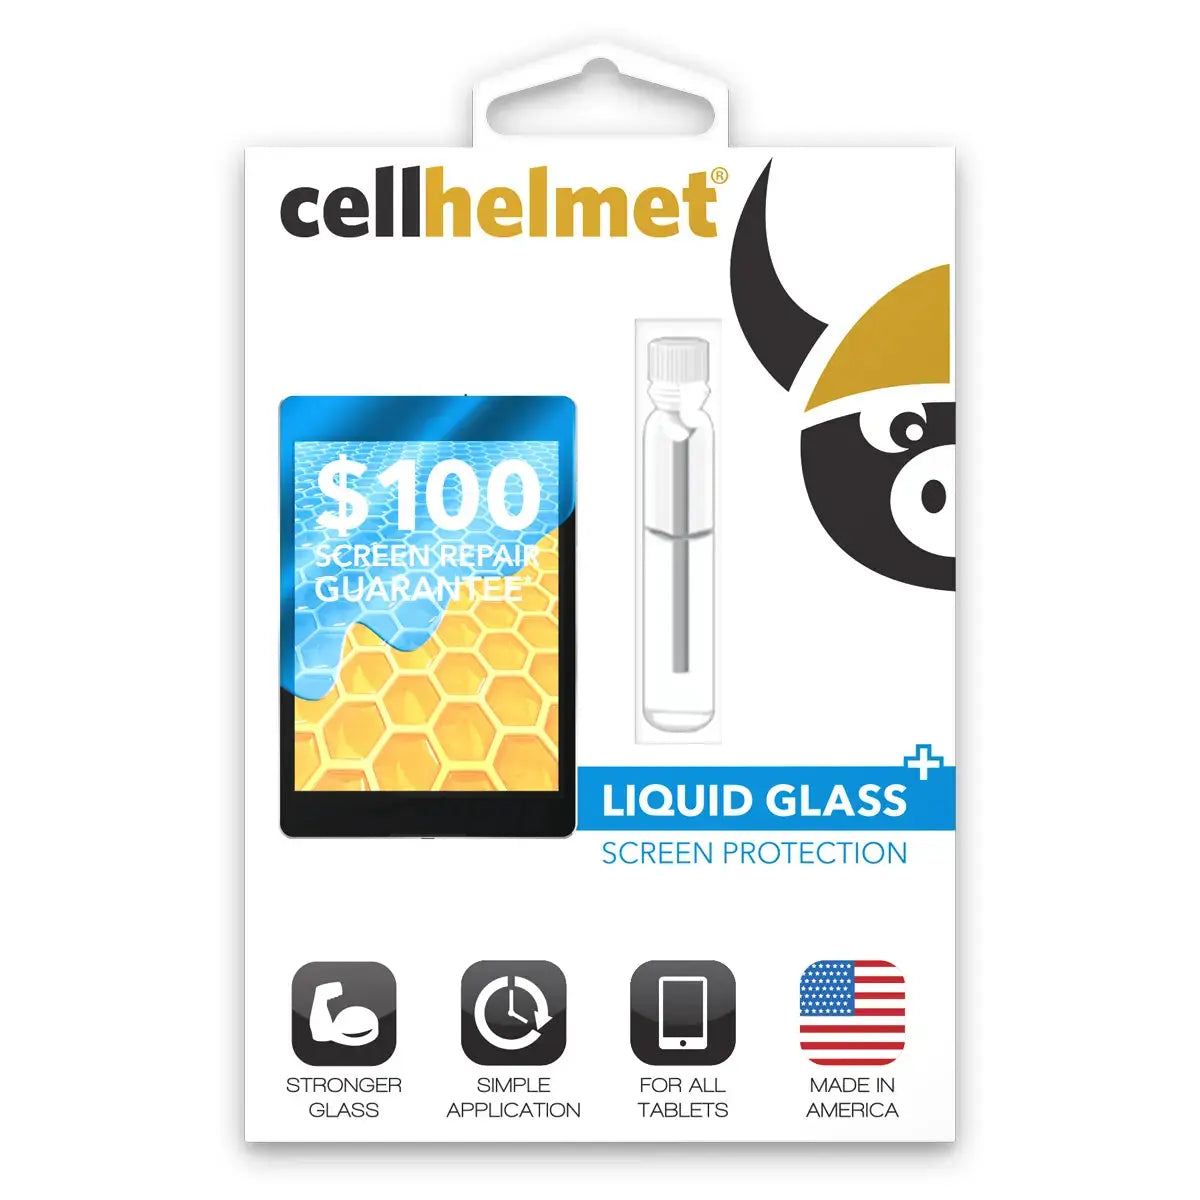 Liquid Glass Screen Protector with $100 Screen Repair Guarantee